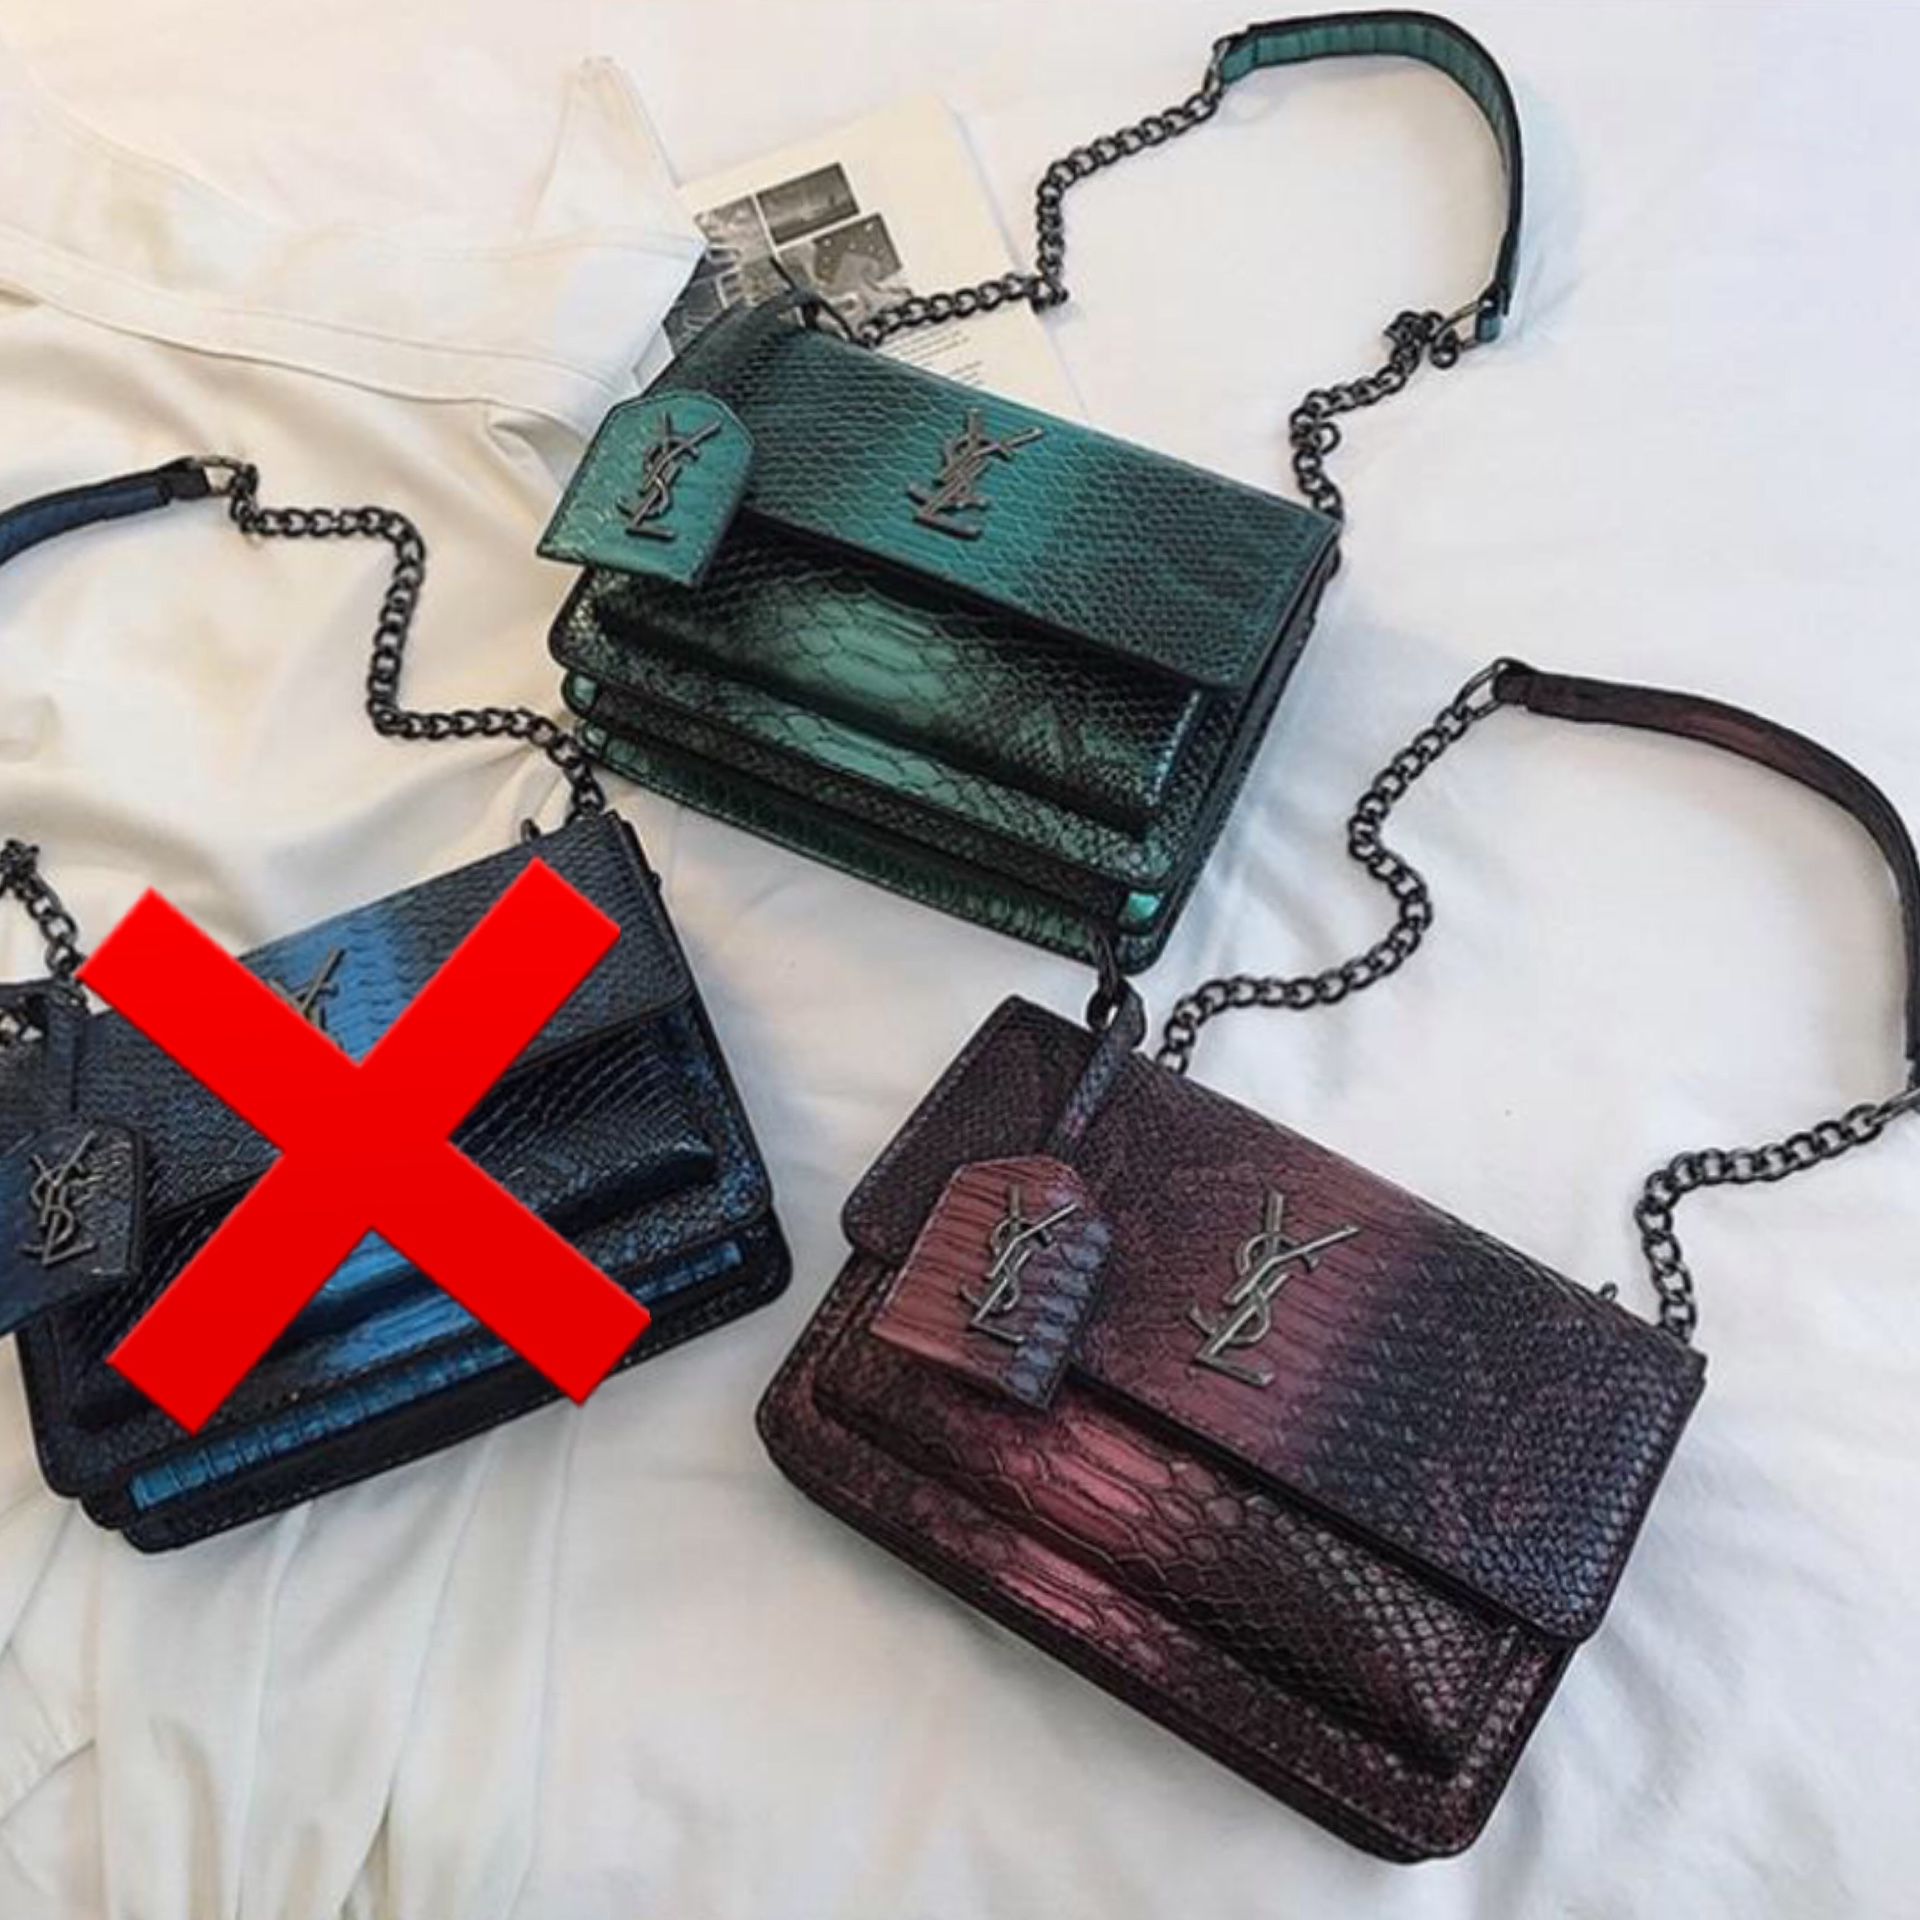 ‼️New Stylish Handbags 2/$100